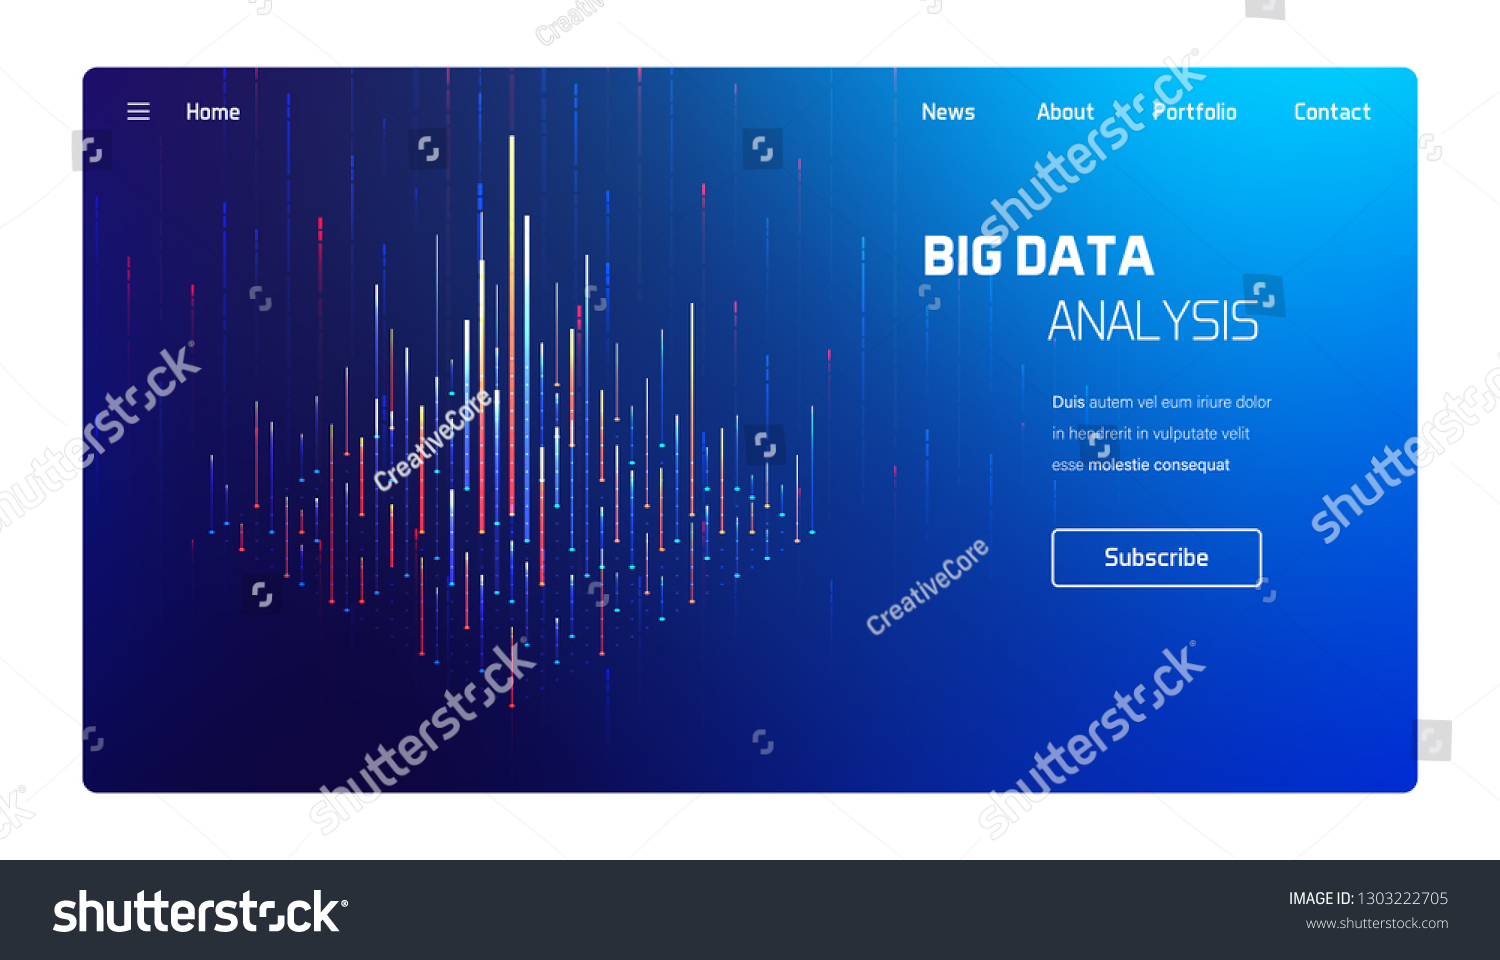 SVG of Big data analysis, computer processing visualisation, business analytics svg